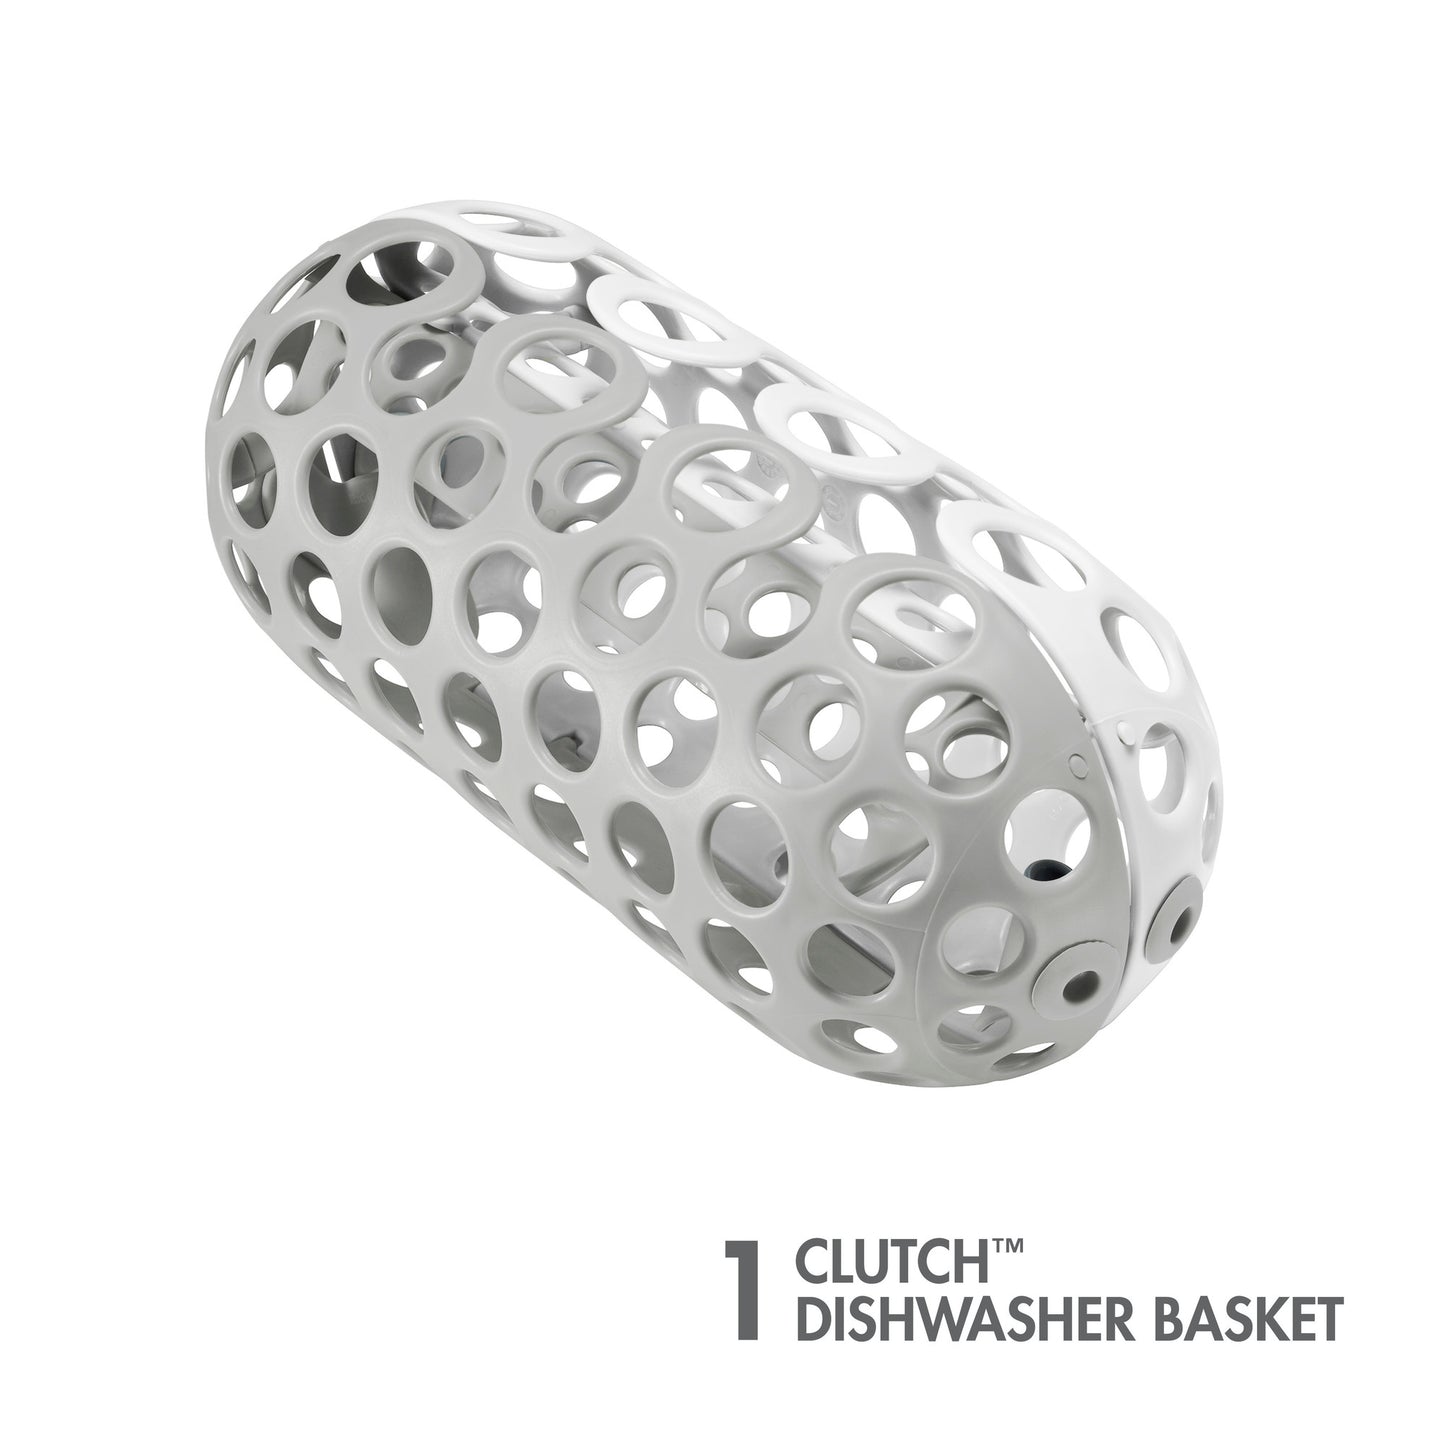 Boon CLUTCH Dishwasher Basket - Grey l Baby City UK Stockist